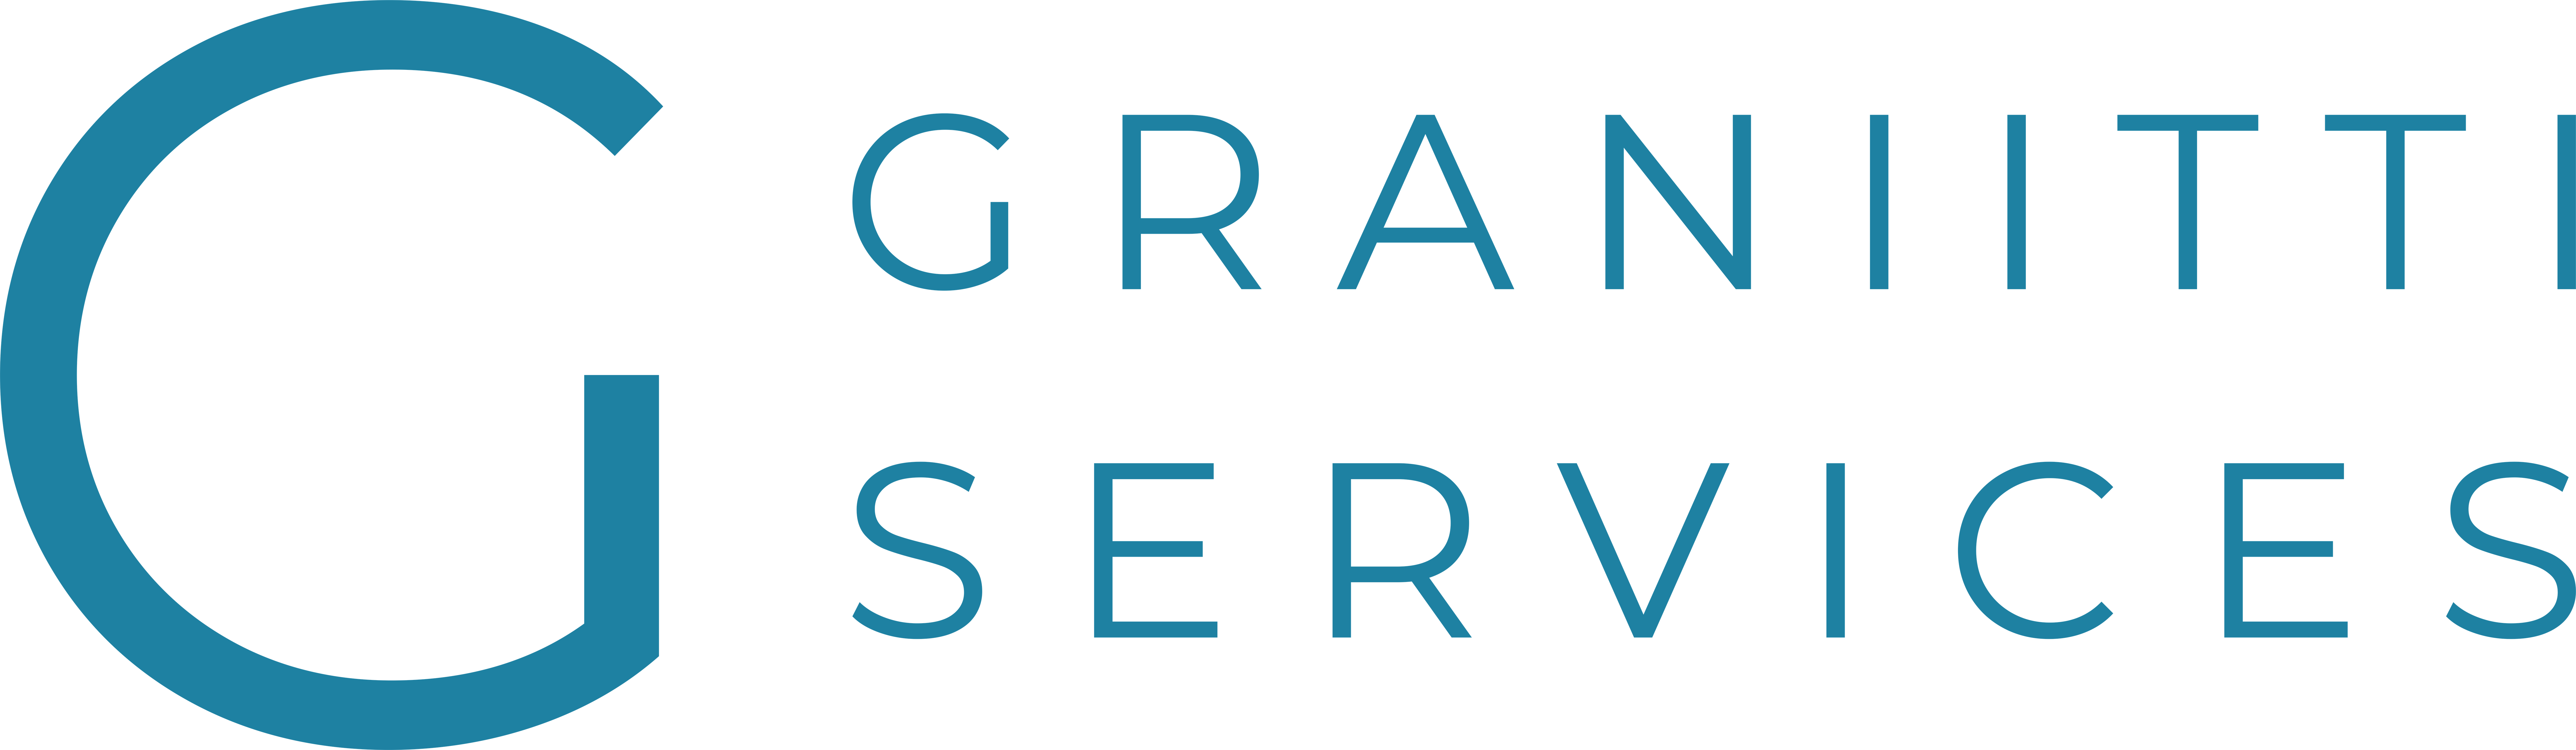 Graniitti Services logo